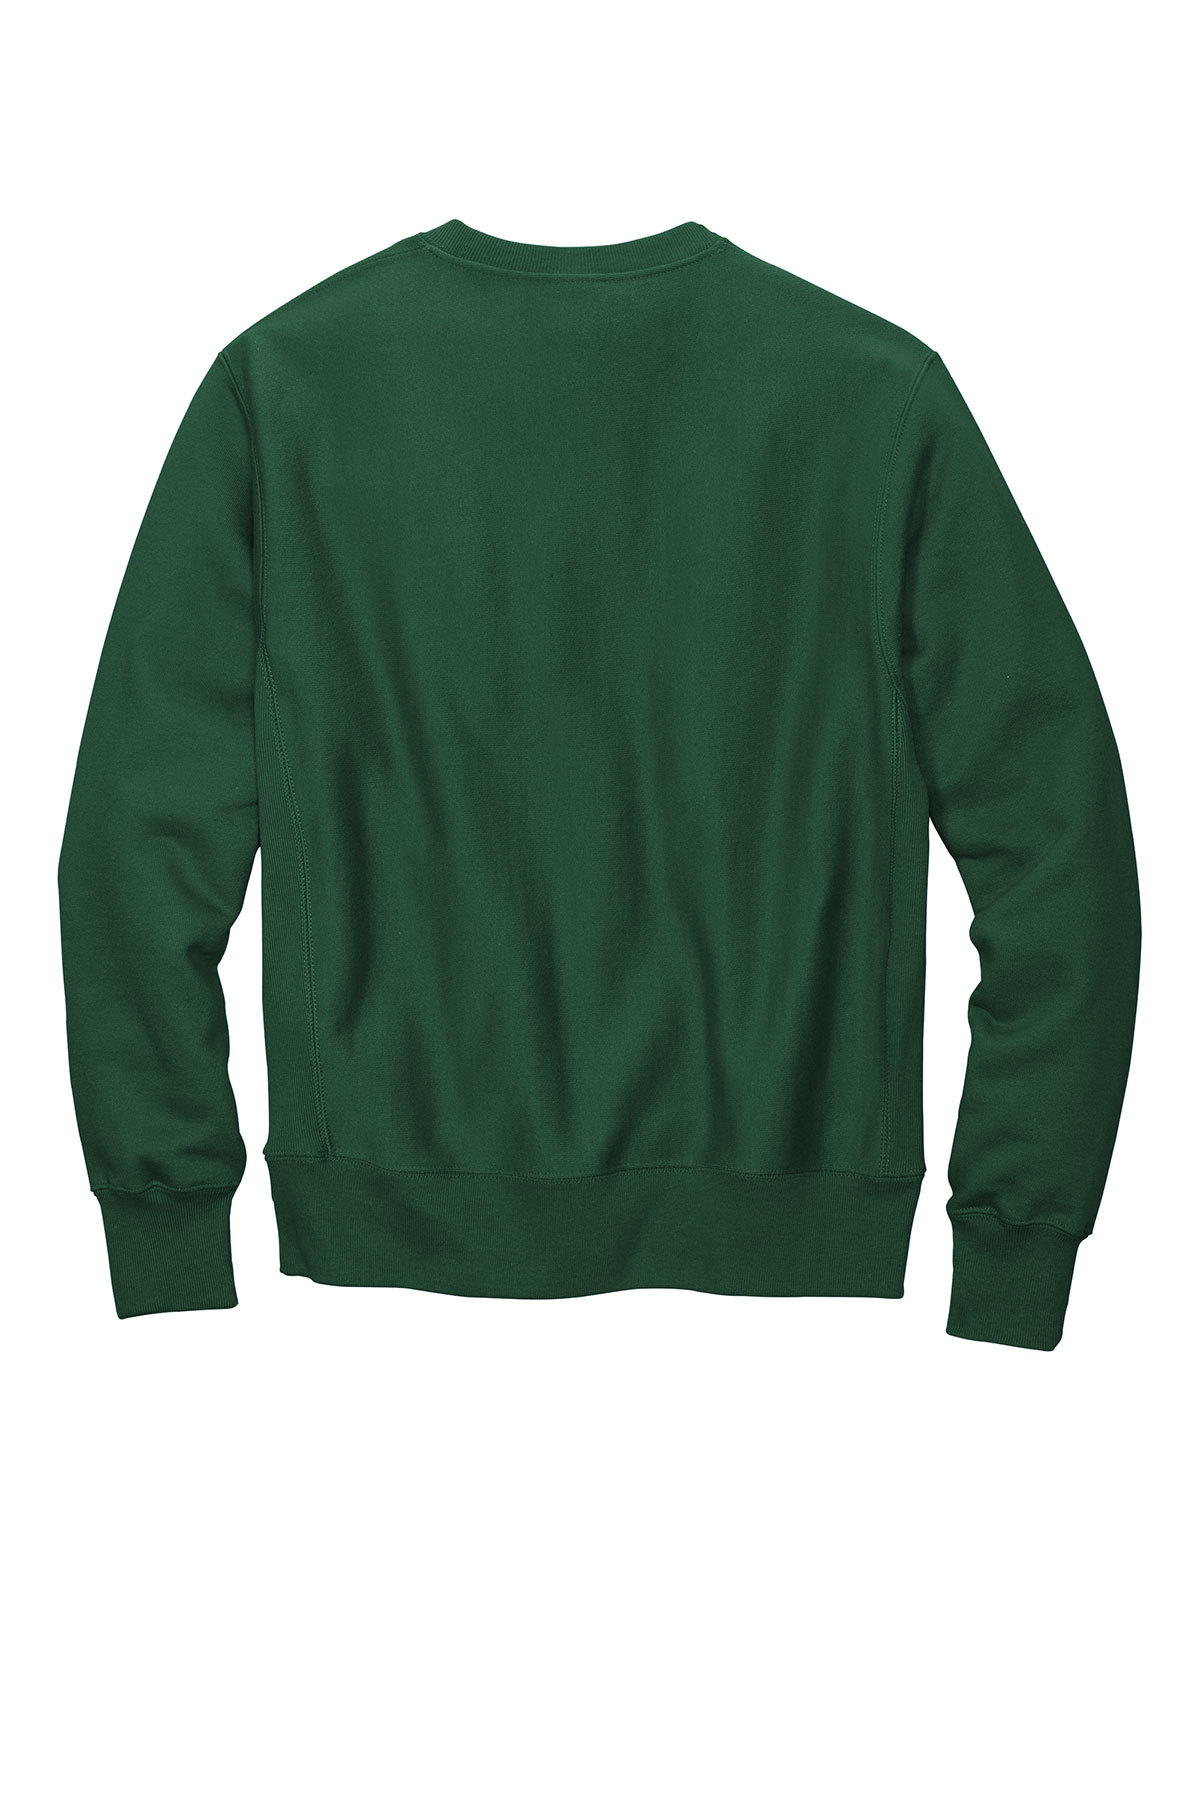 Reverse Weave ® Crewneck Sweatshirt 